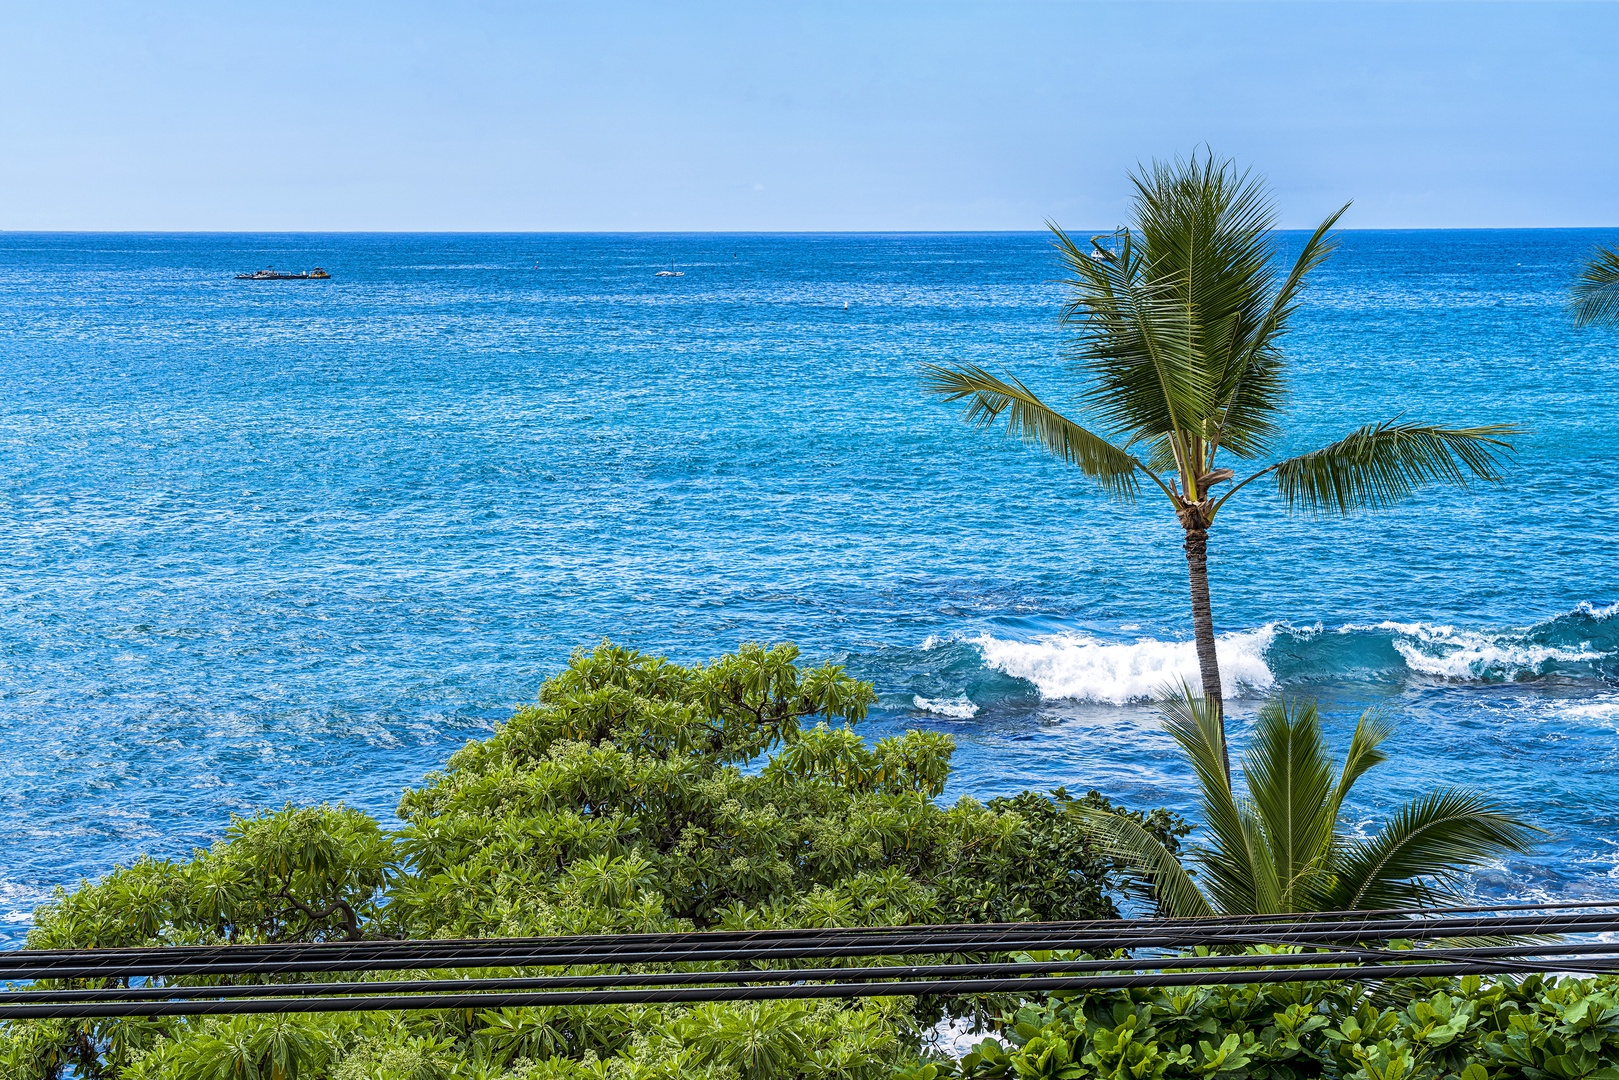 Kailua Kona Vacation Rentals, Kona Alii 304 - Stunning views